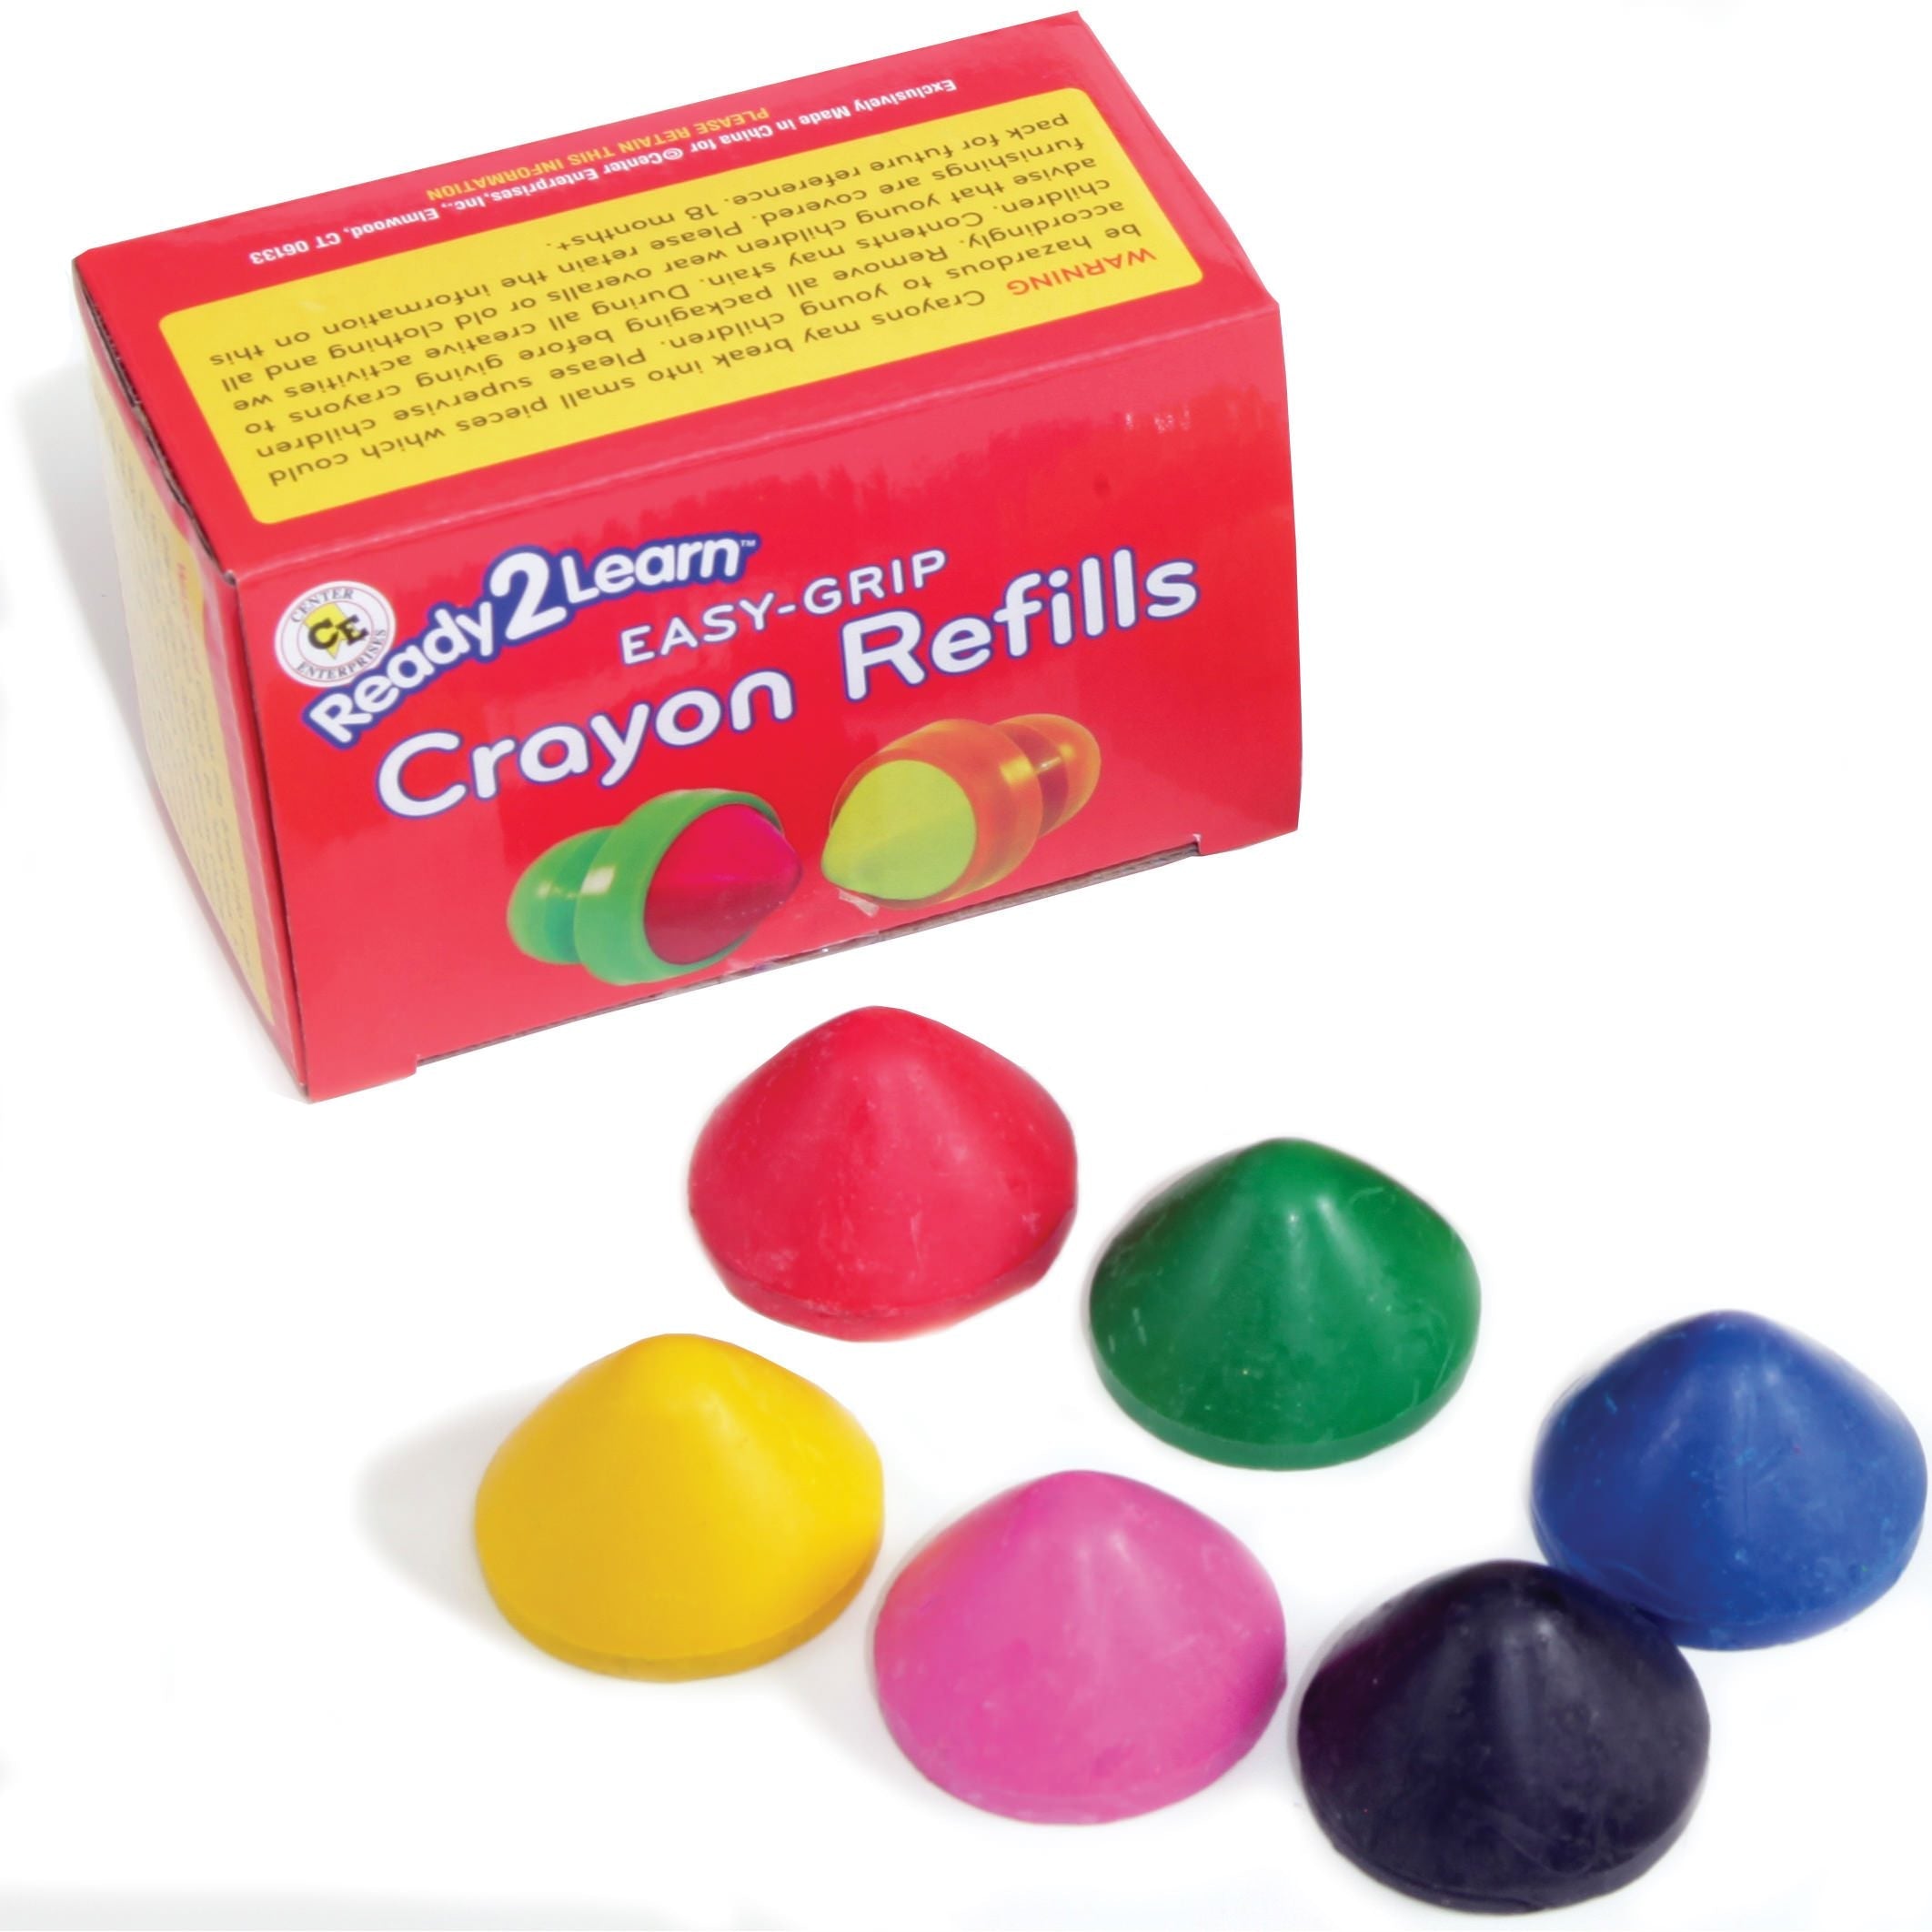 READY 2 LEARN® Easy Grip Crayon Refills